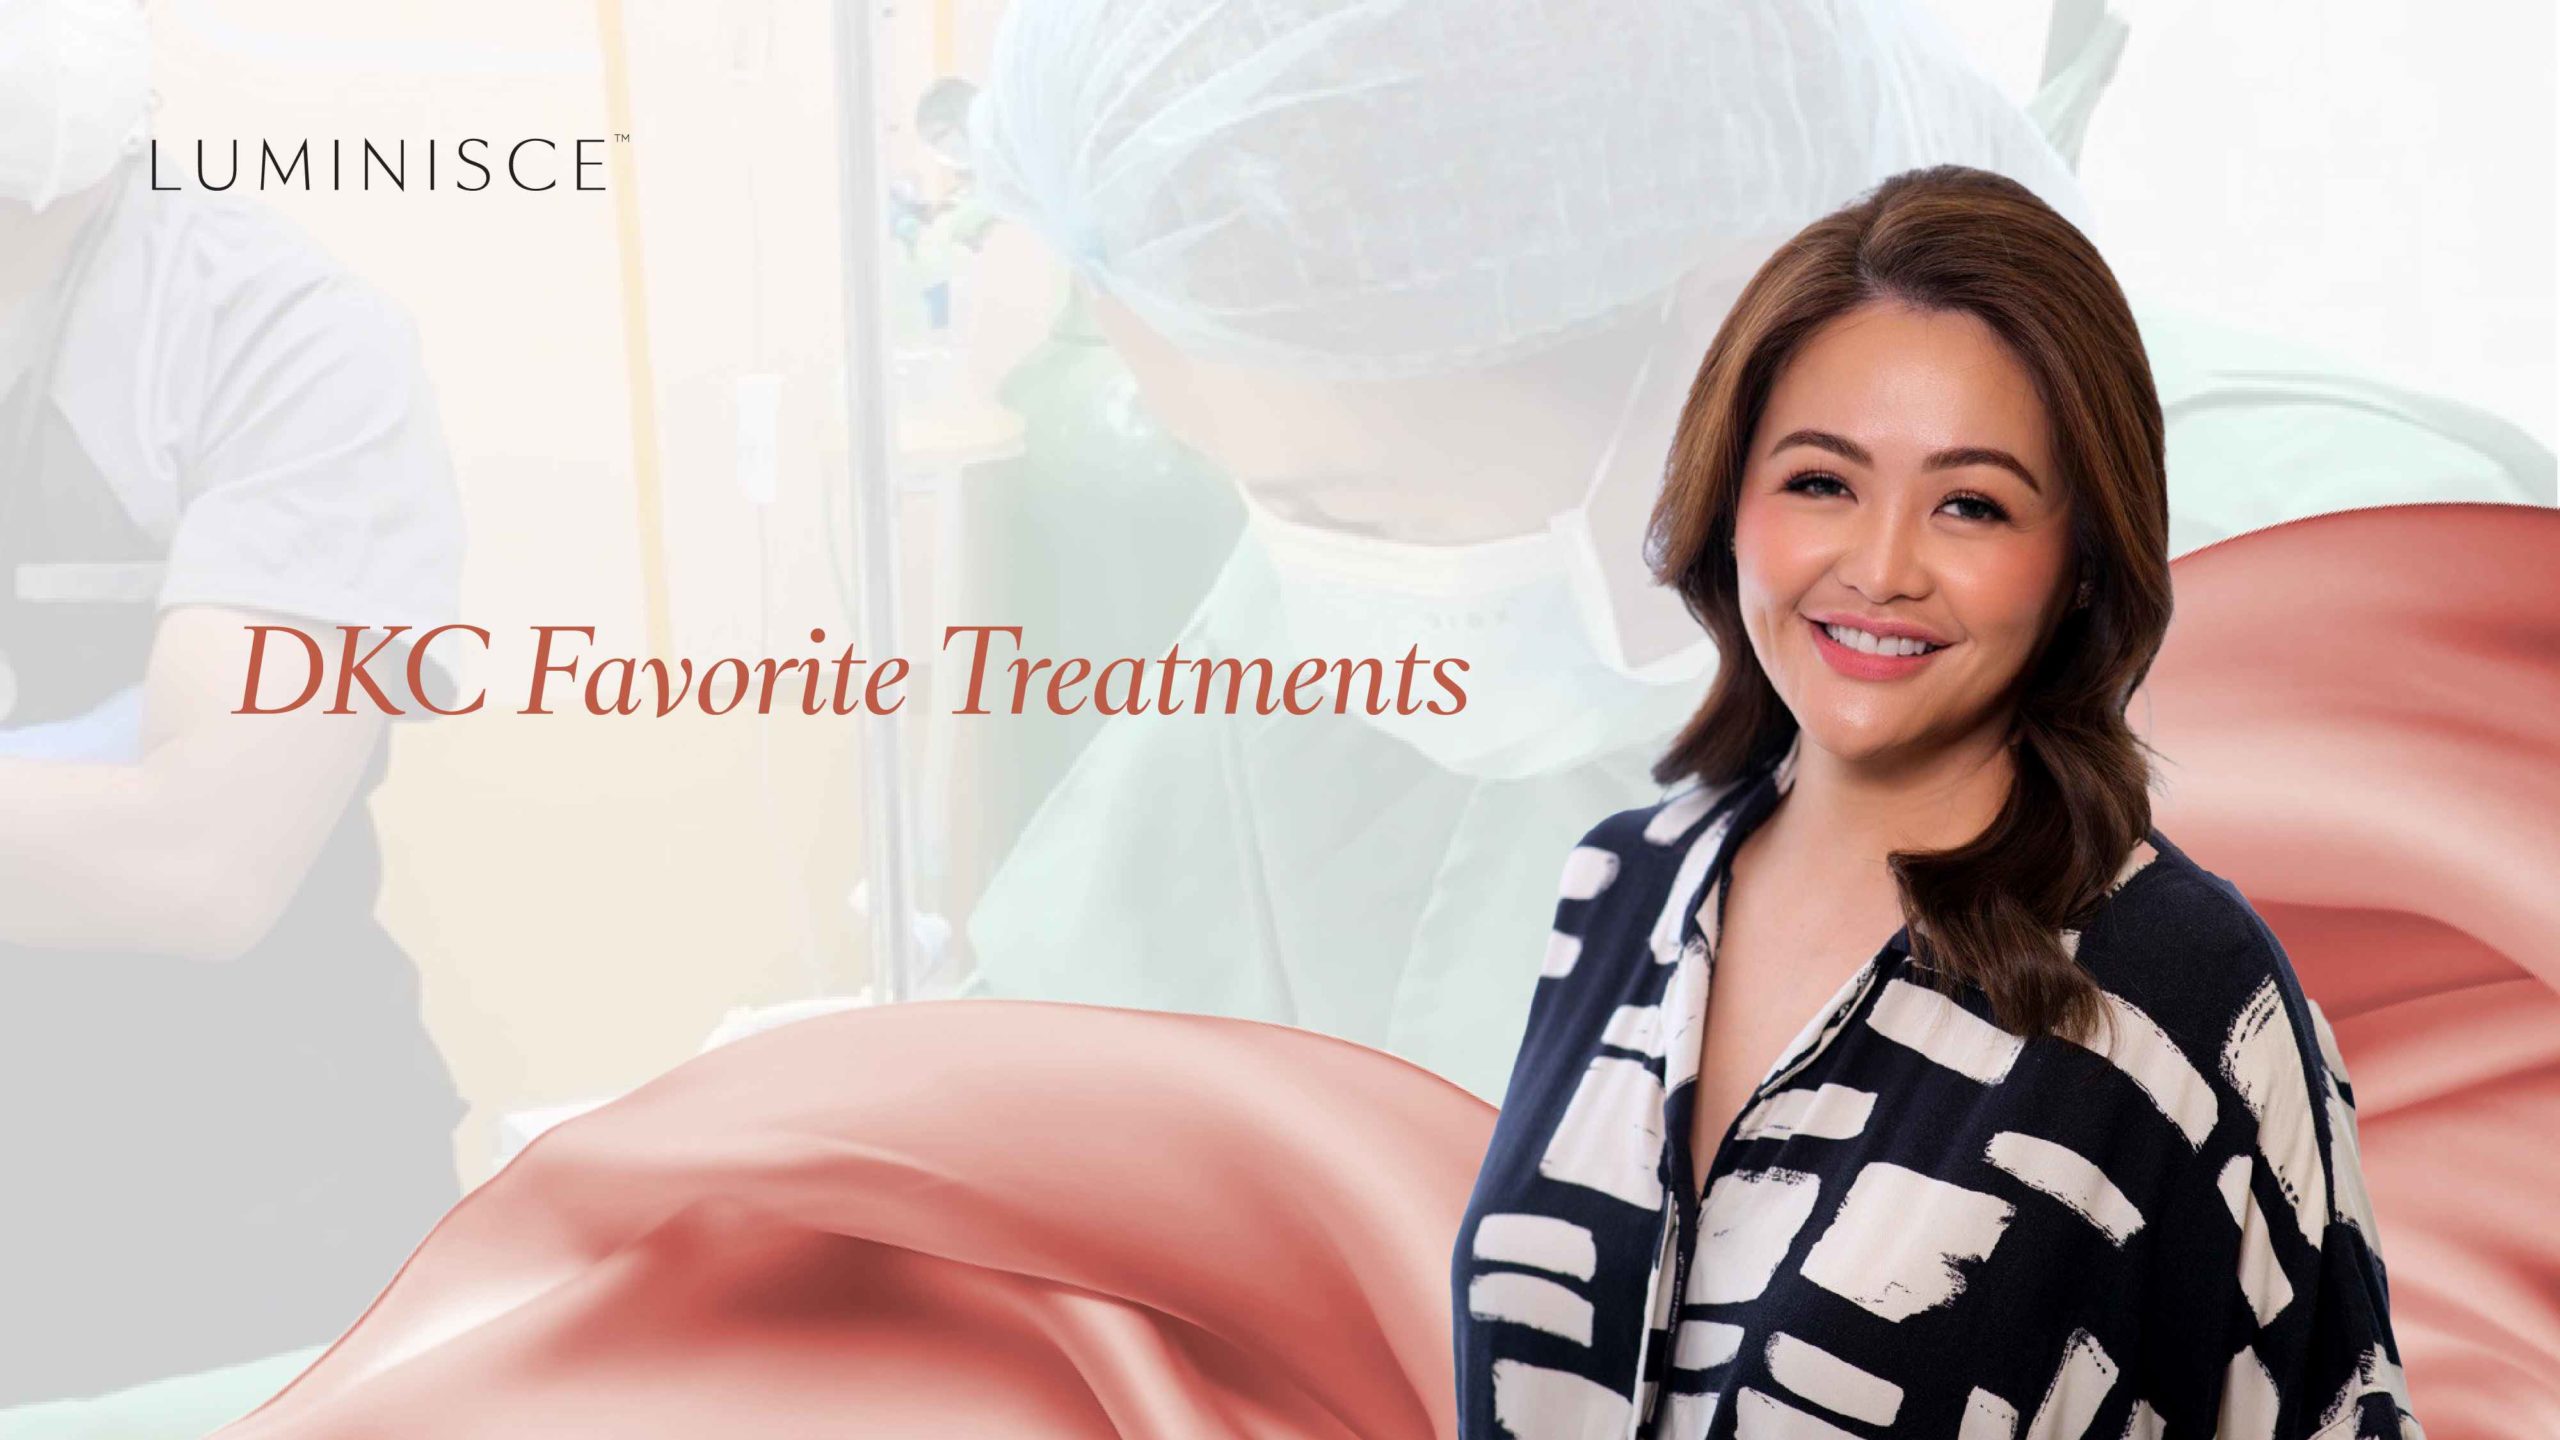 Dr. Kaycee's Favorite Treatments at Luminisce